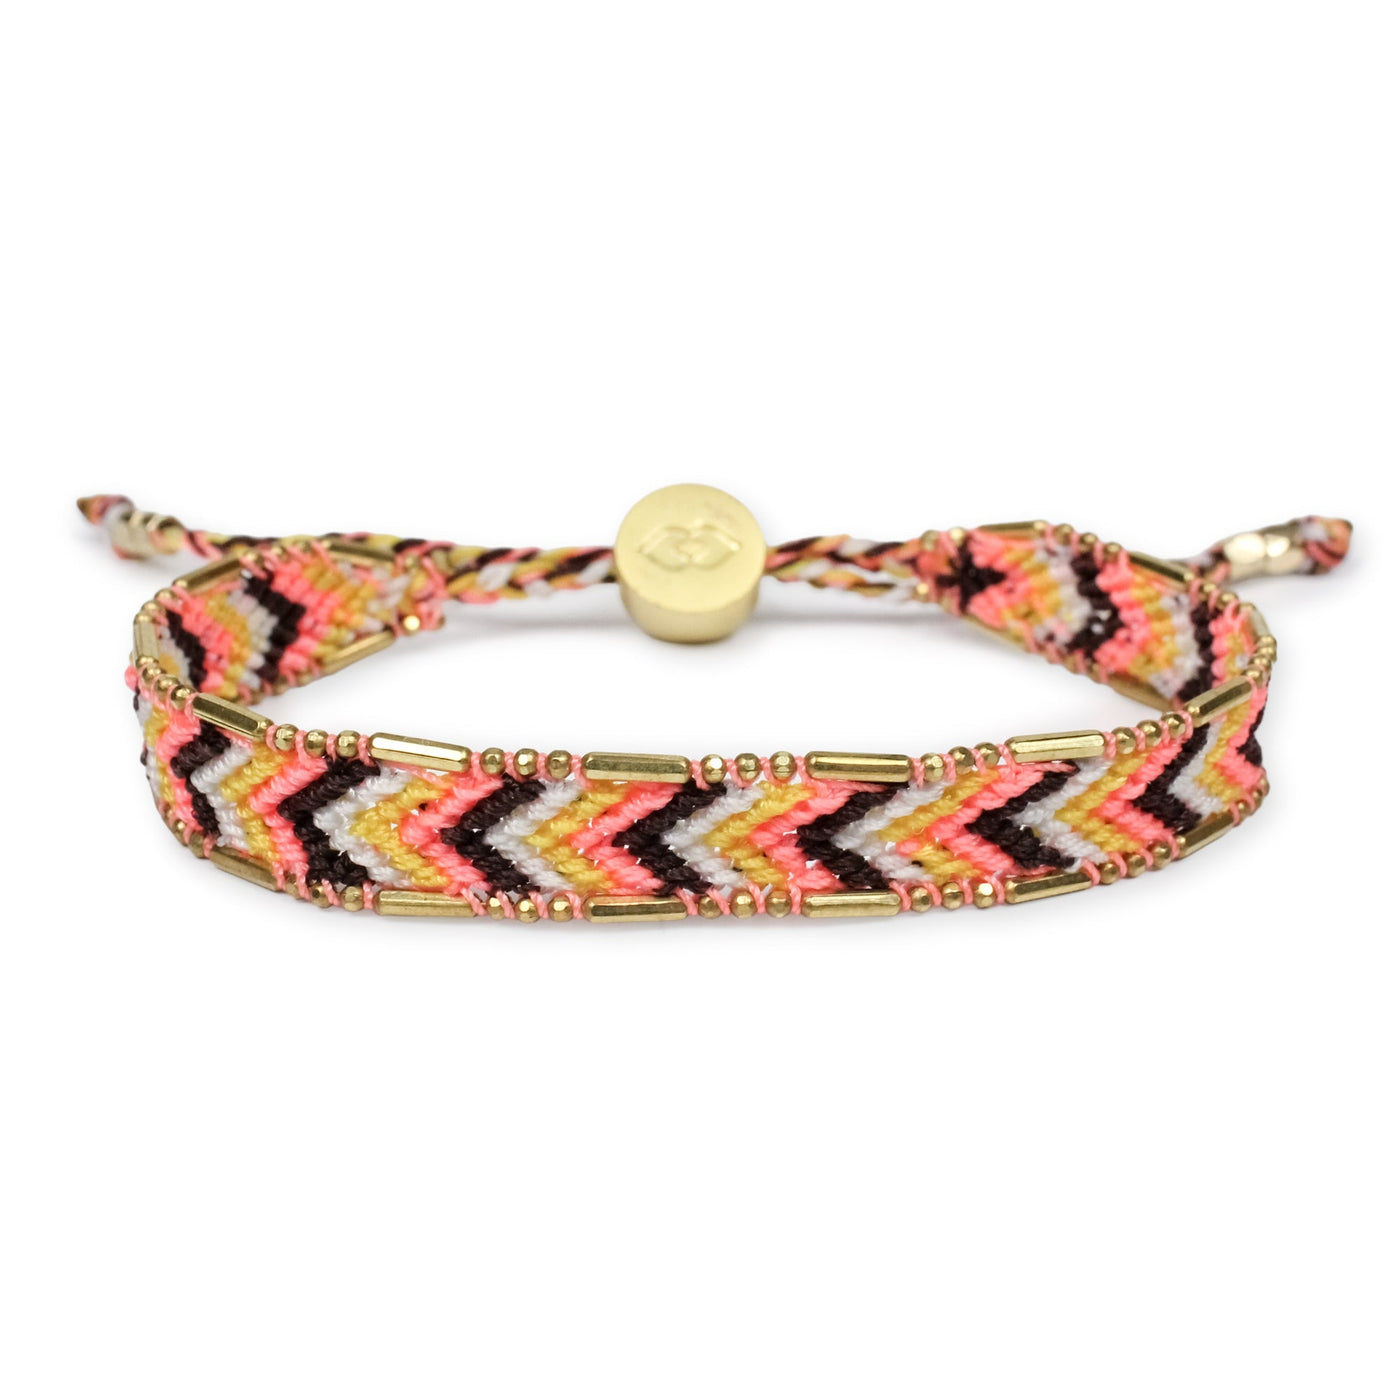 Bali Friendship Bracelet - Sedona Arrow